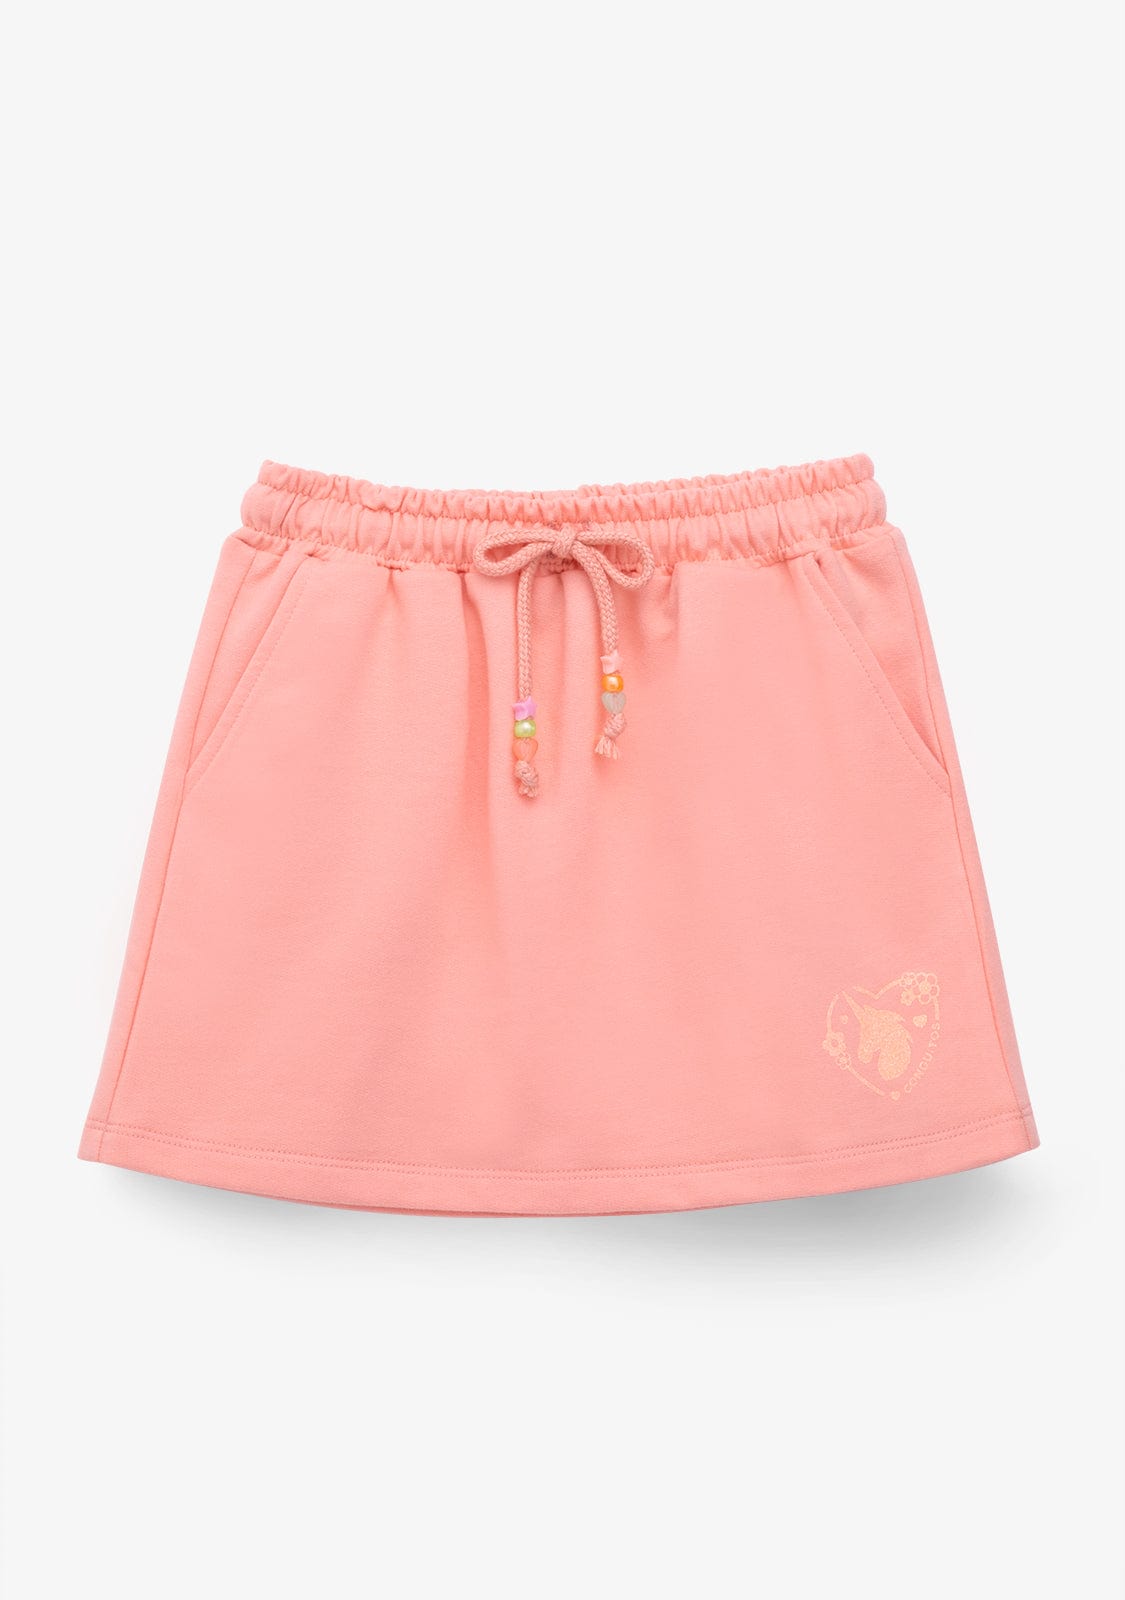 CONGUITOS TEXTIL Clothing Girl´s Orange Plush Plain Sports Skirt